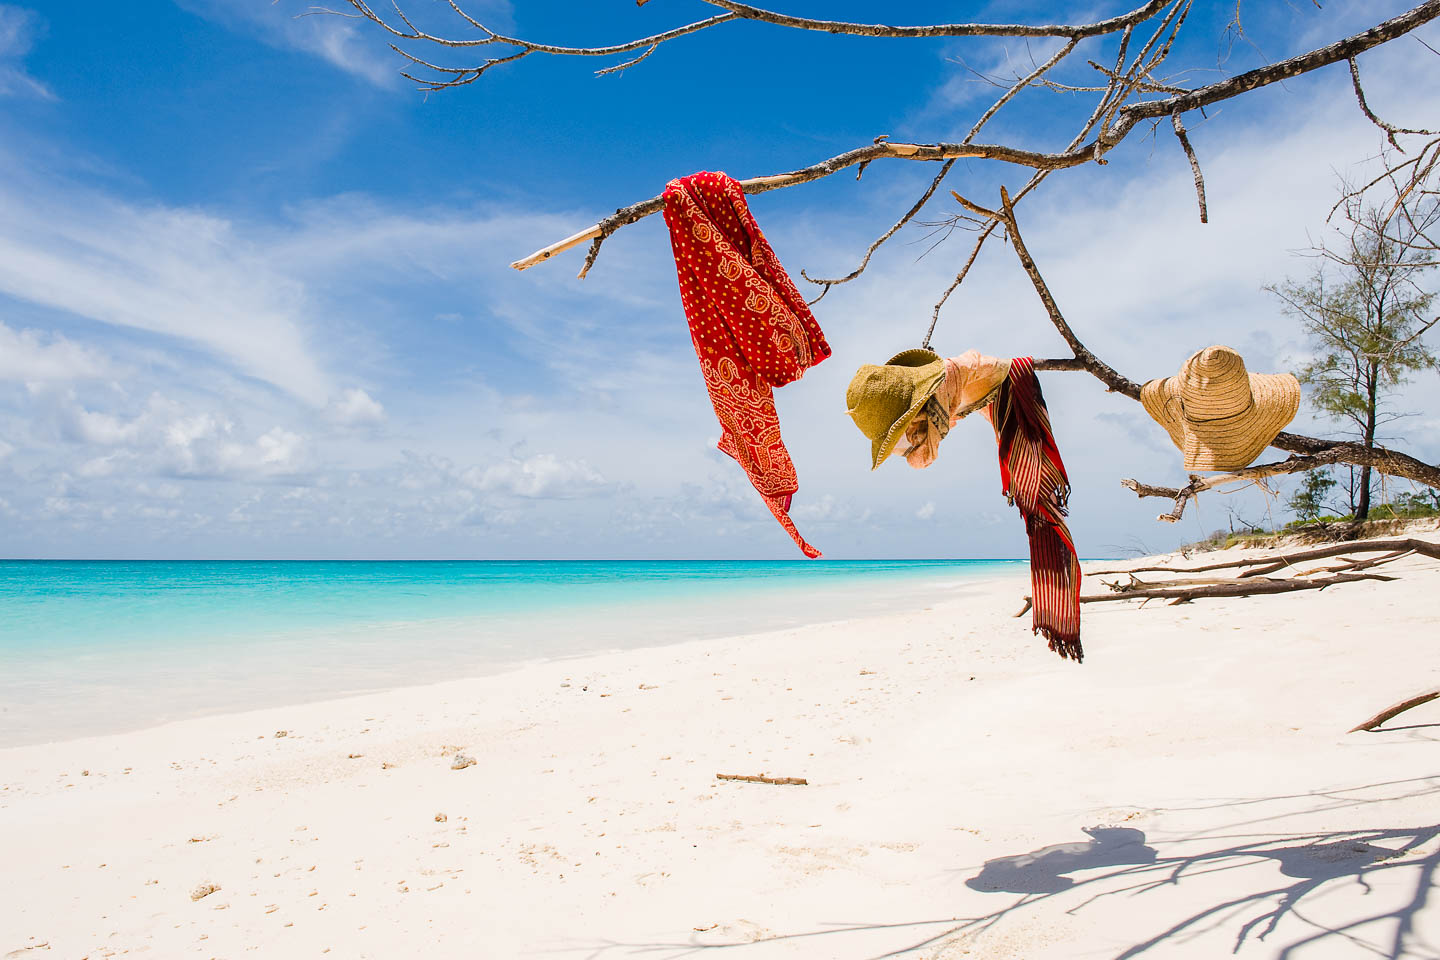 Indian Ocean Islands vamizi island beach quarimbas archipelago mozambique